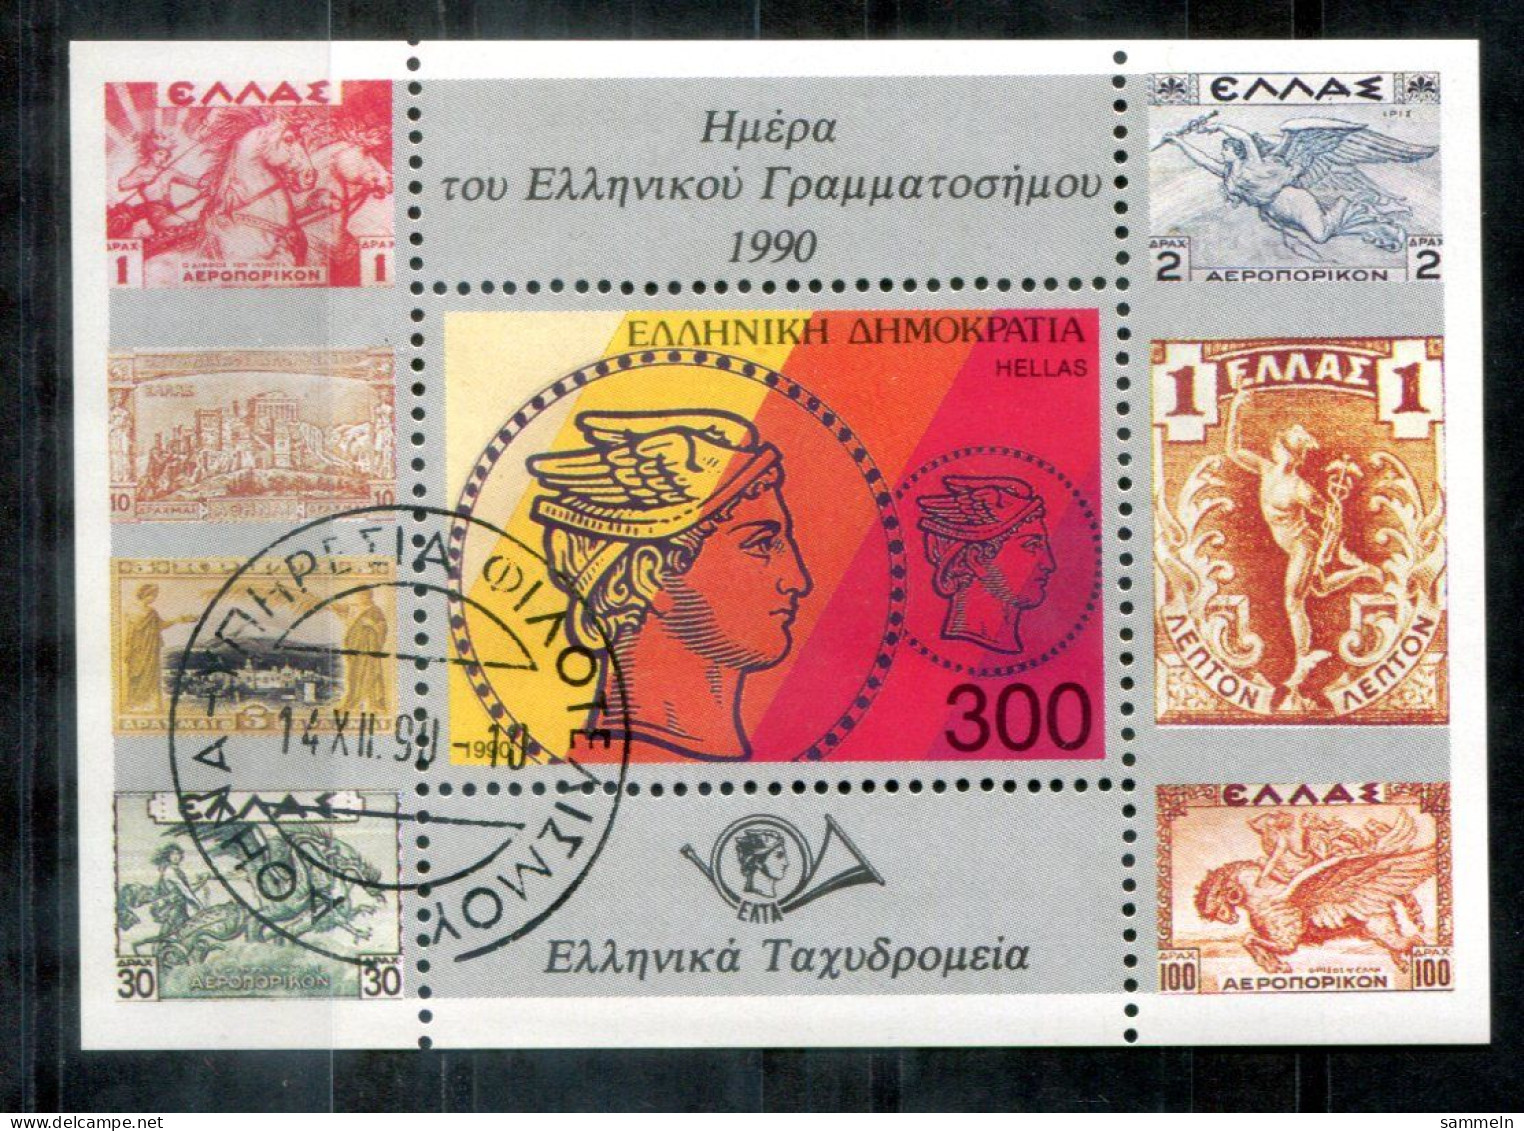 GRIECHENLAND Block 8, Bl.8 Canc. - Marke Auf Marke, Stamp On Stamp, Timbre Sur Timbre - GREECE / GRÈCE - Blocks & Sheetlets